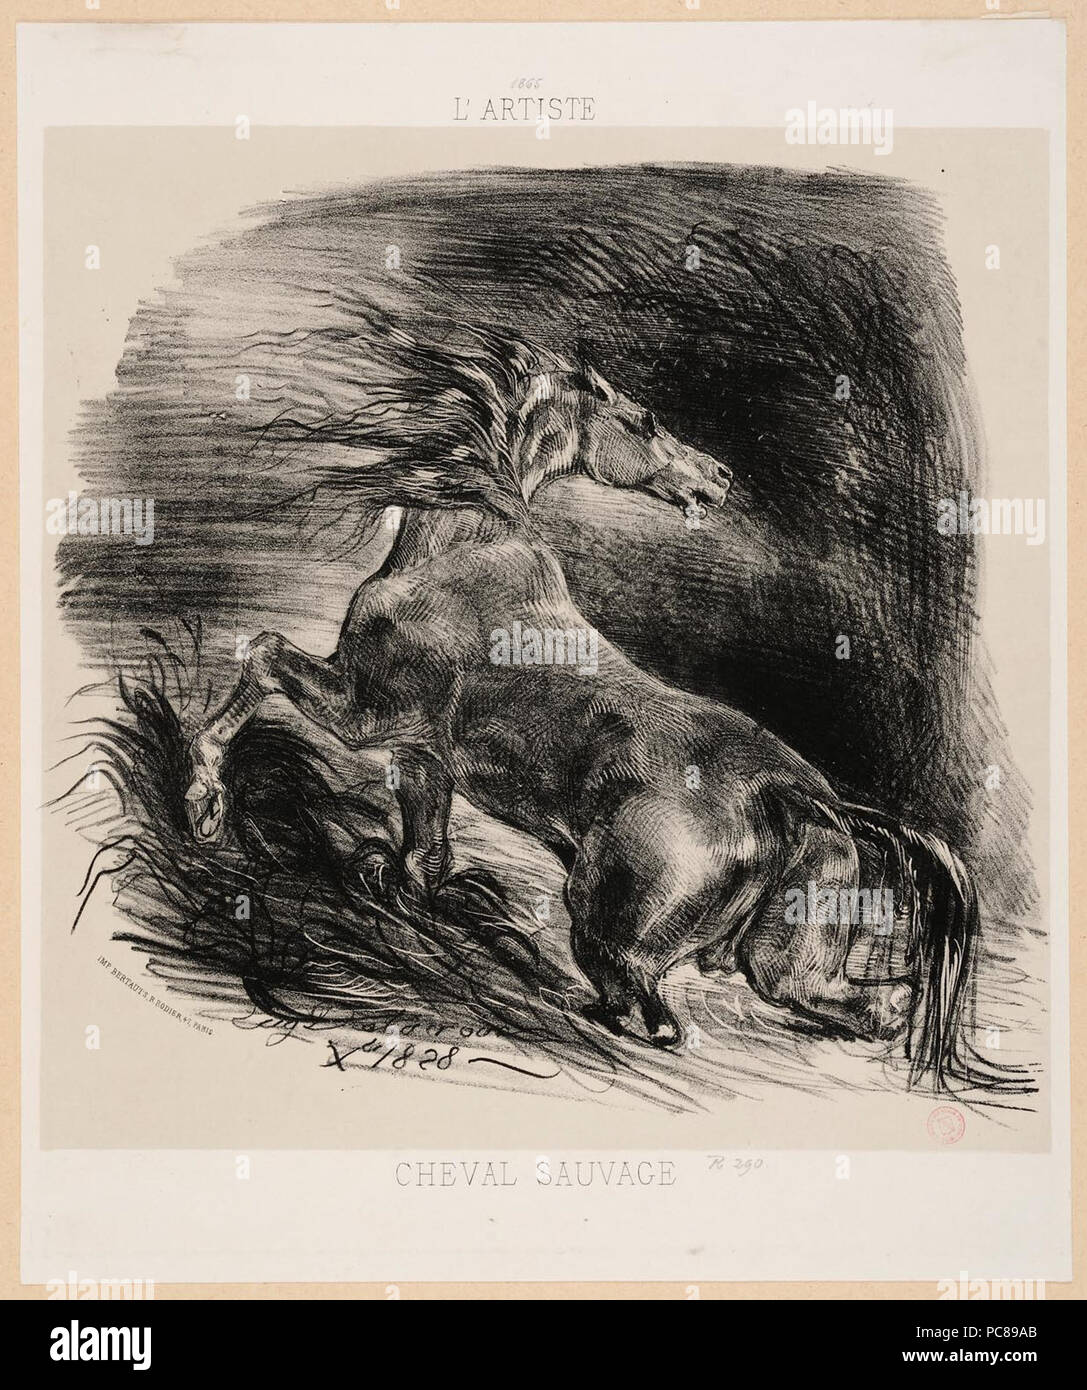 157 Delacroix Cheval sauvage 1828 Stock Photo